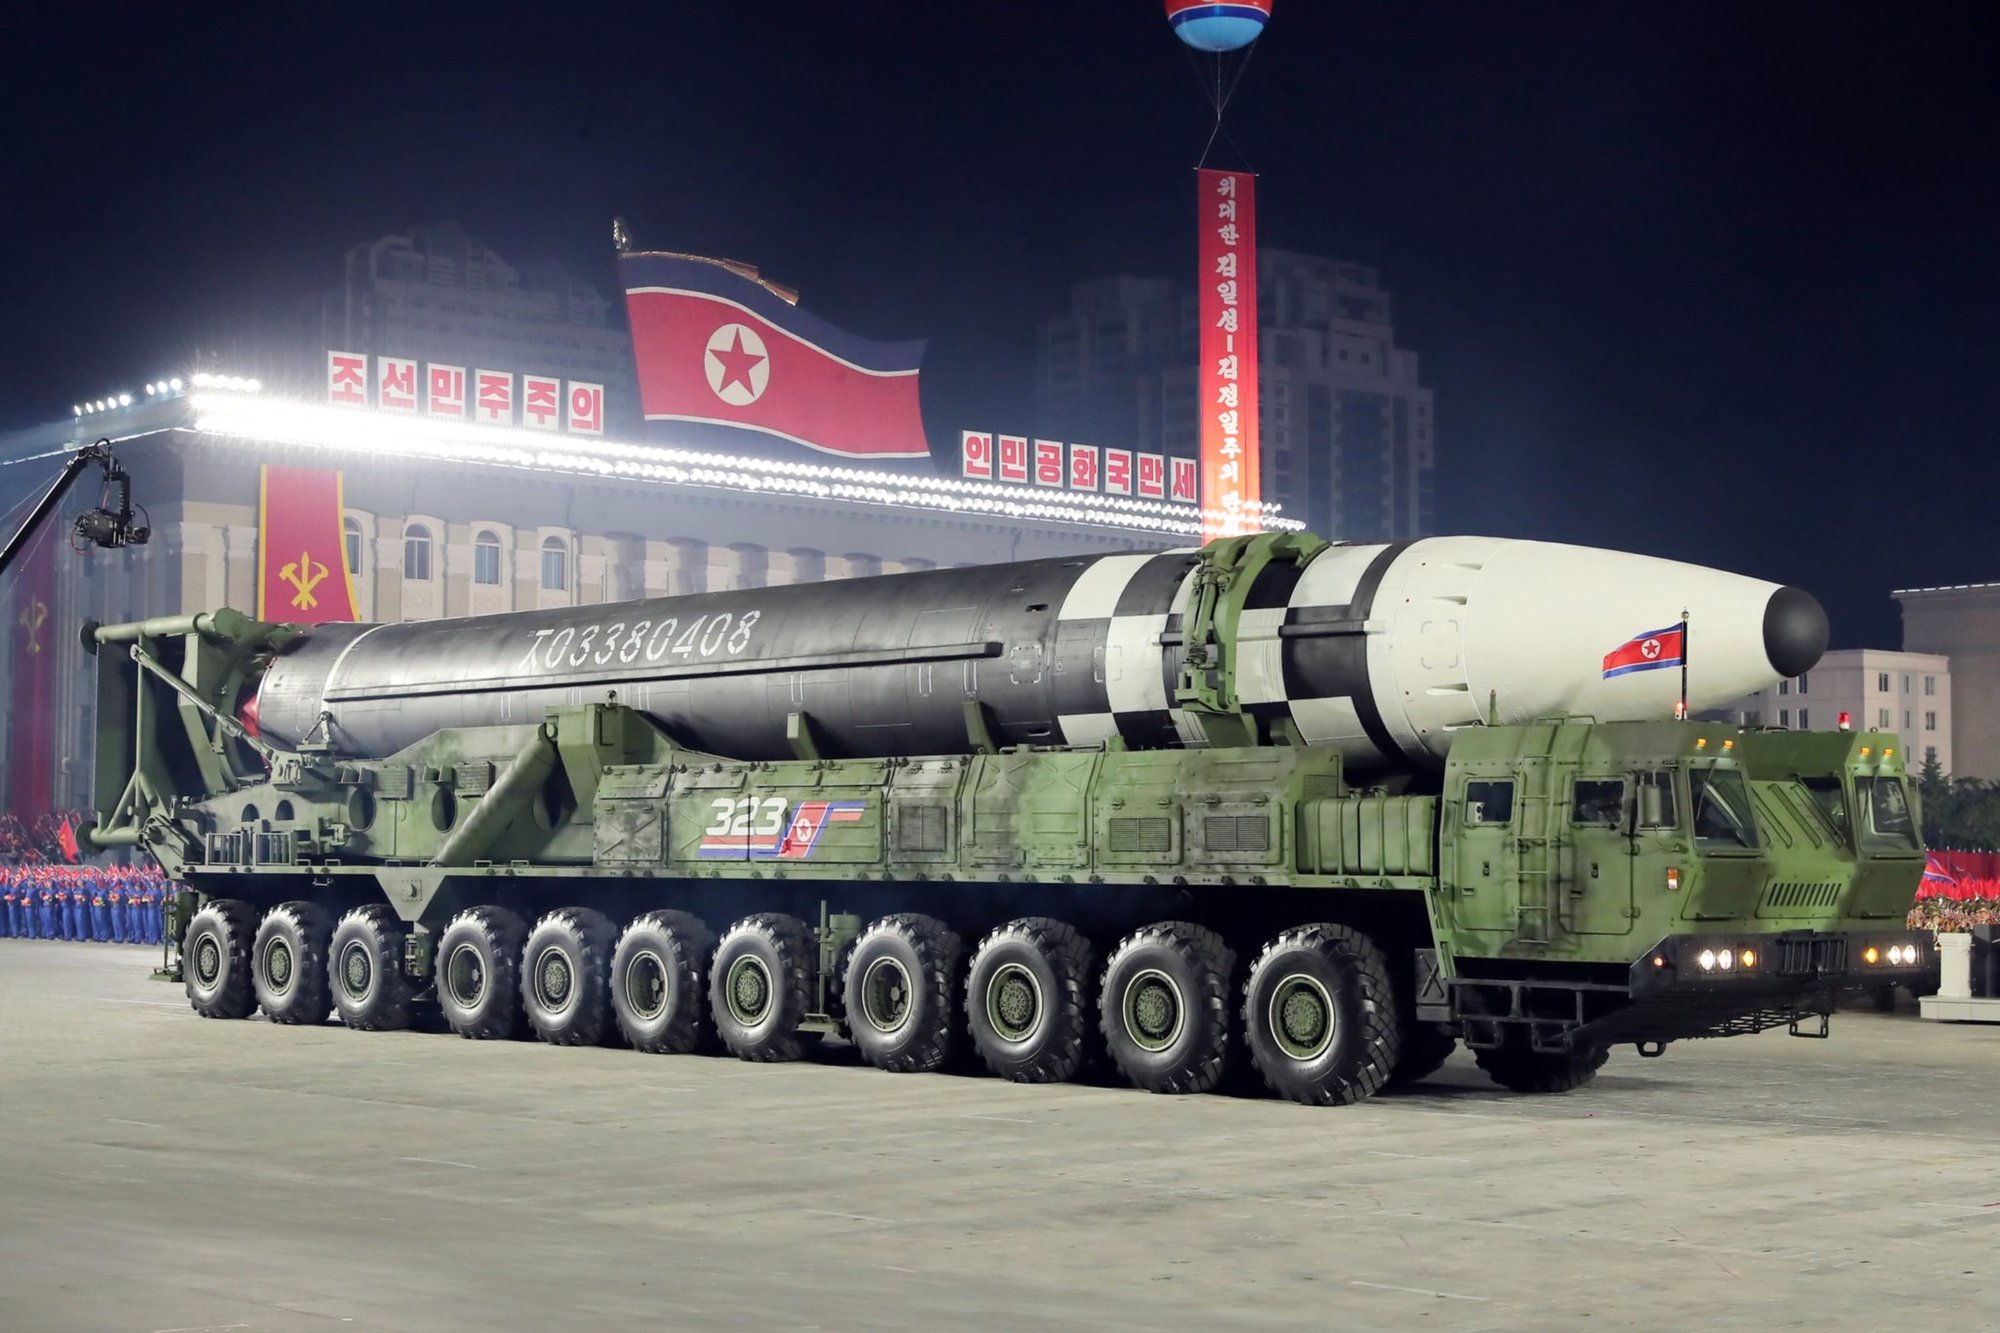 North Korea’s new intercontinental ballistic missile. Photo by Lokman Karadag via Twitter.